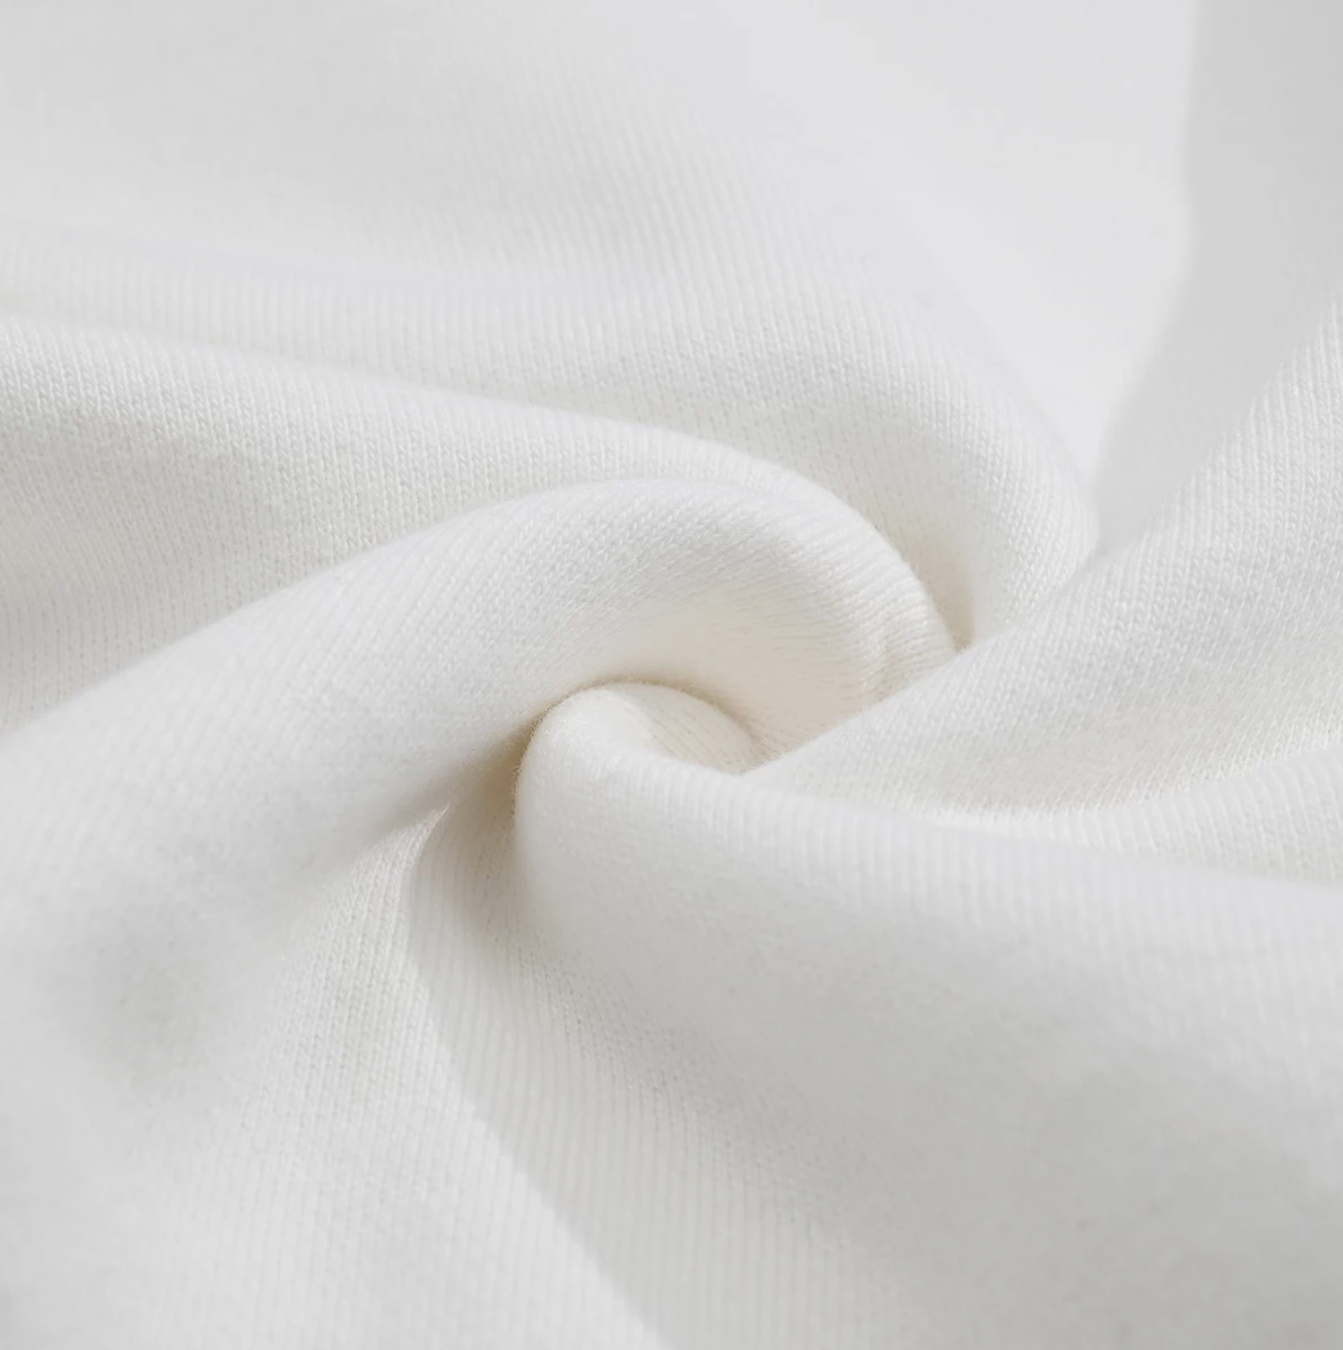 Ravebound - (BACK PRINT) - Unisex Fleece-lined Full-zip Hoodie